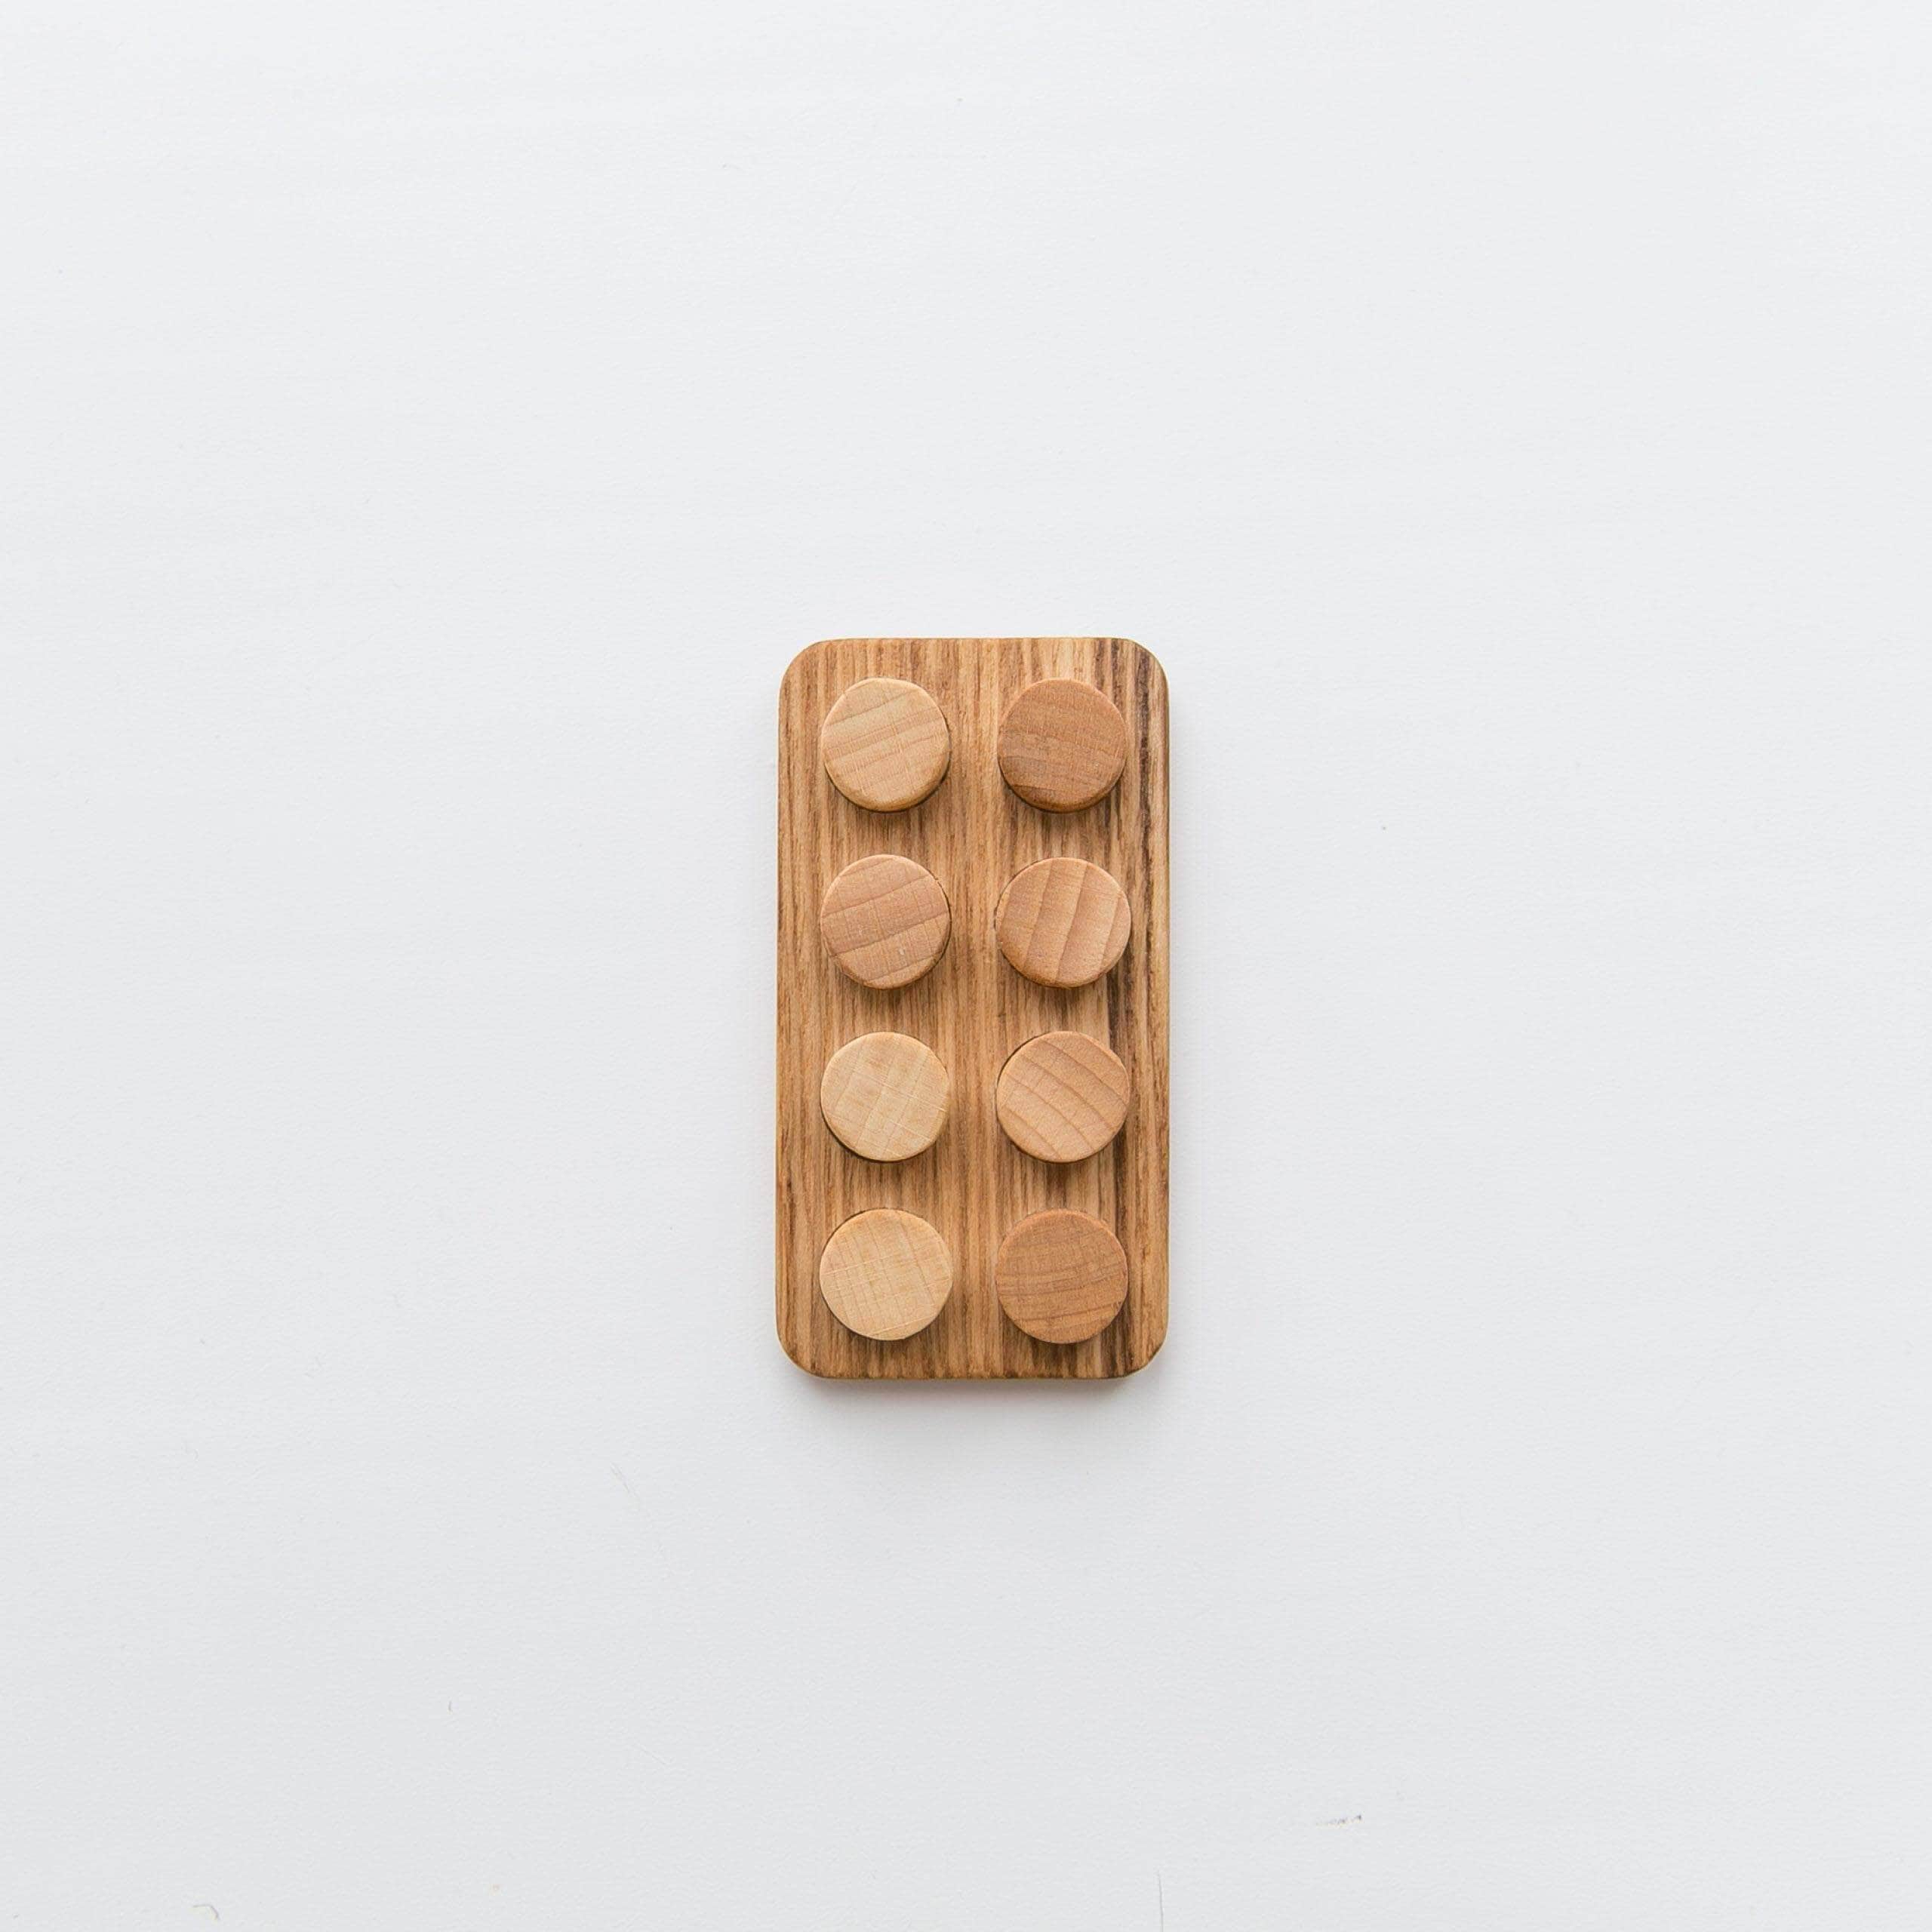 Arztset - wooden toy -9